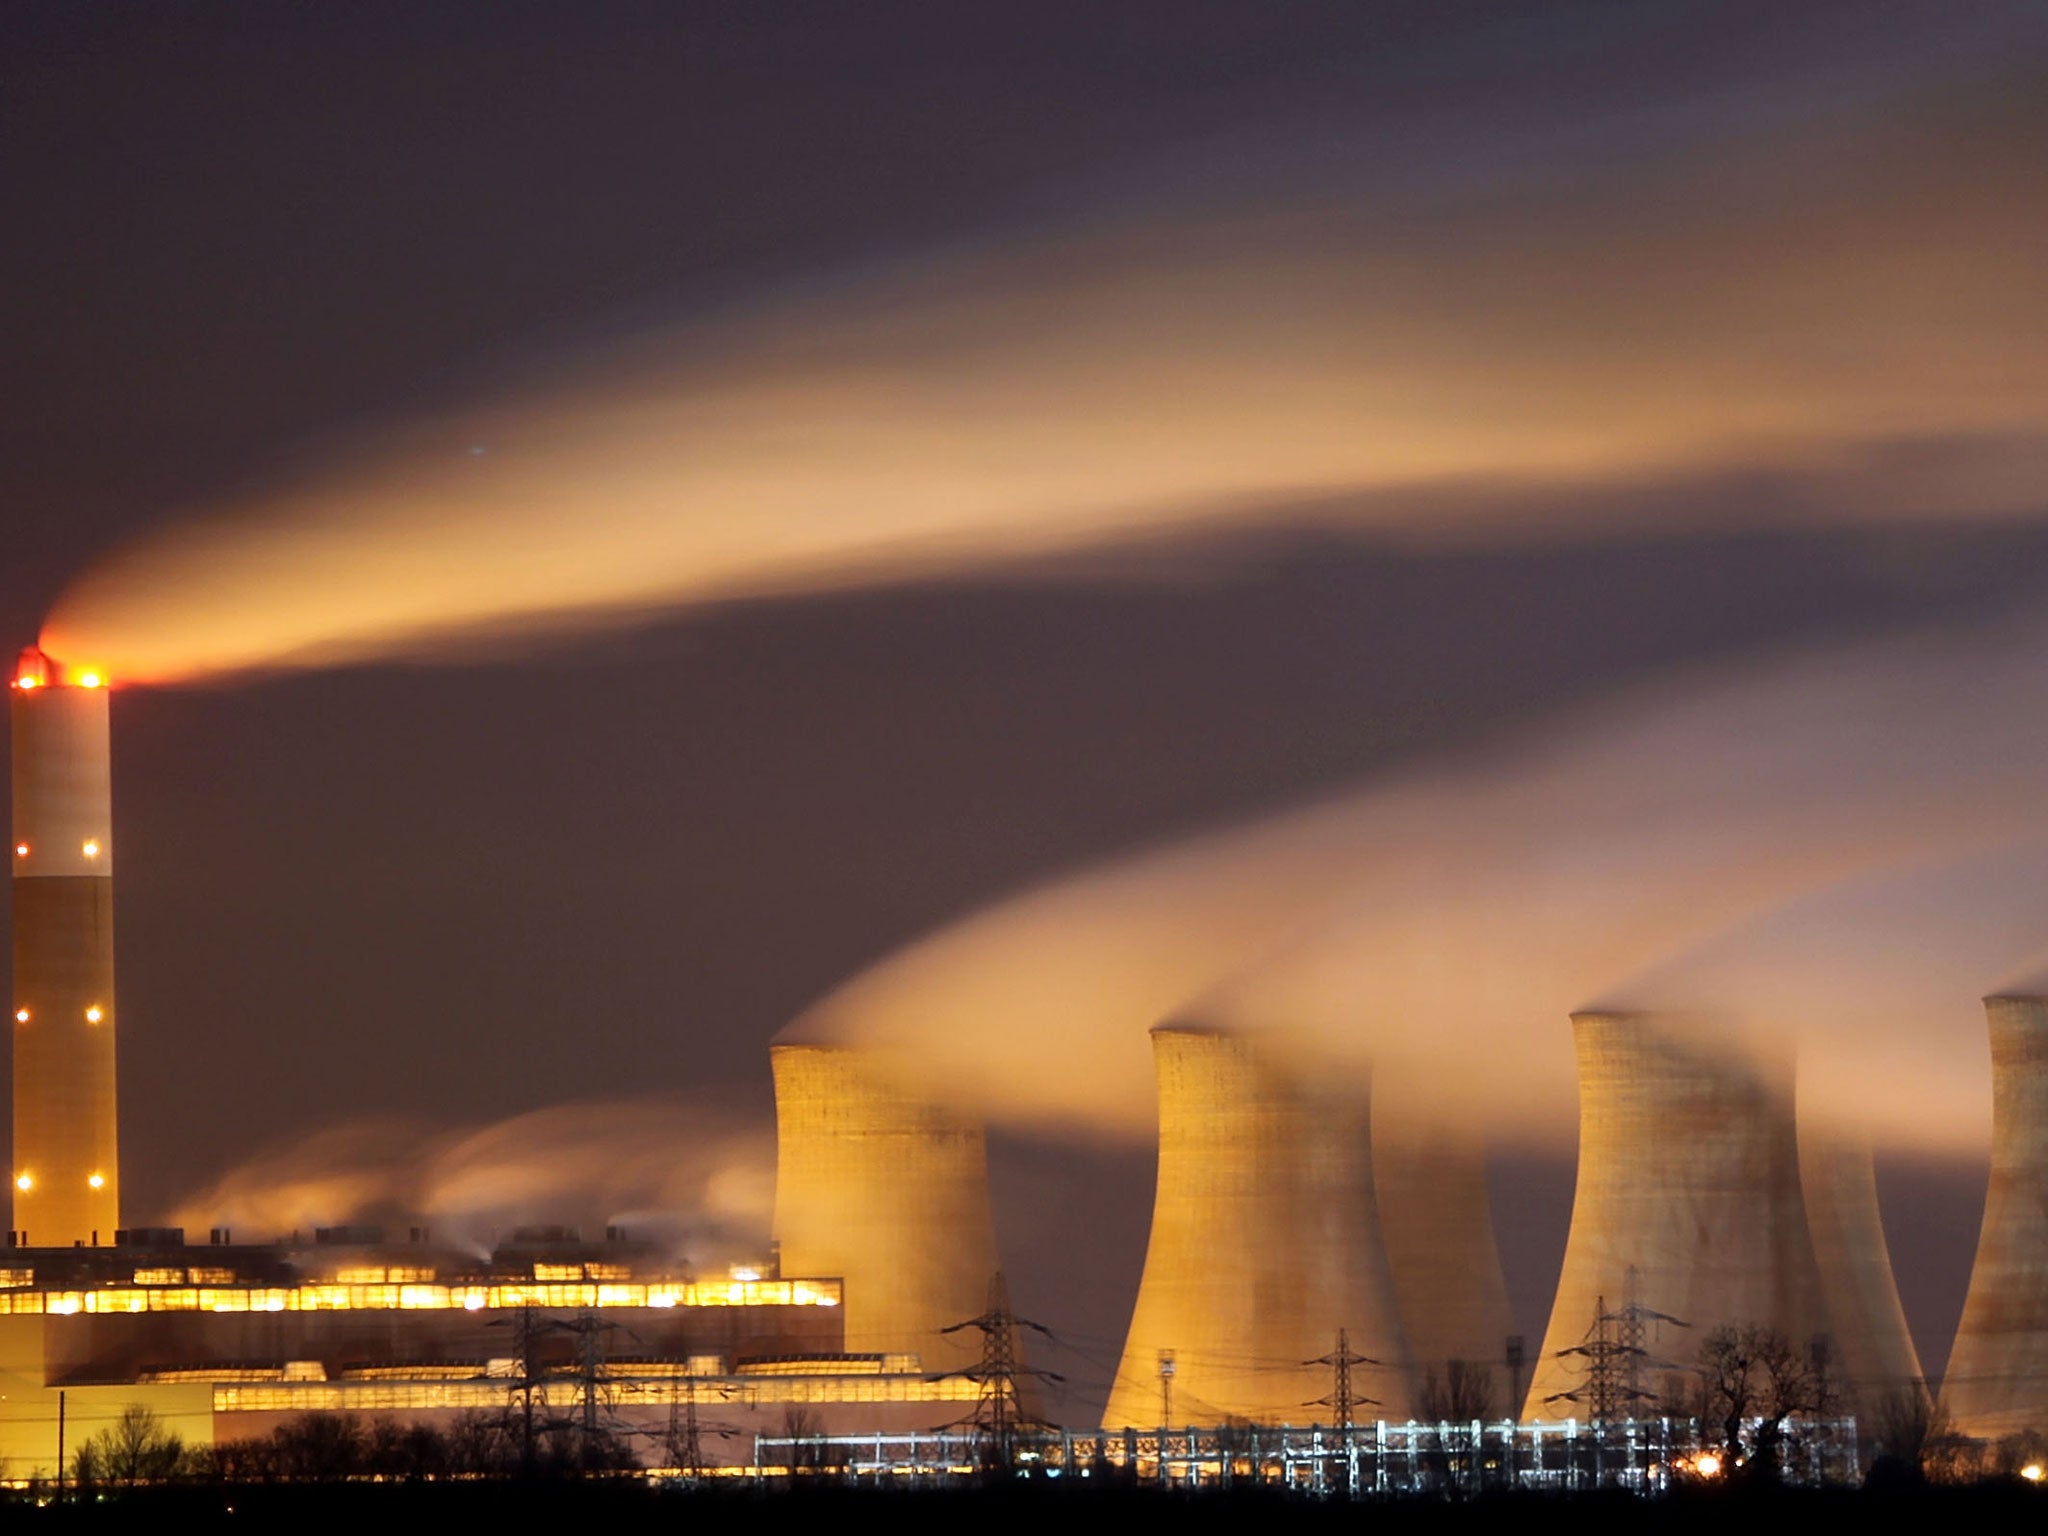 The coal fuelled Cottam power station generates electricity on November 30, 2009 in Retford, Nottinghamshire, United Kingdom